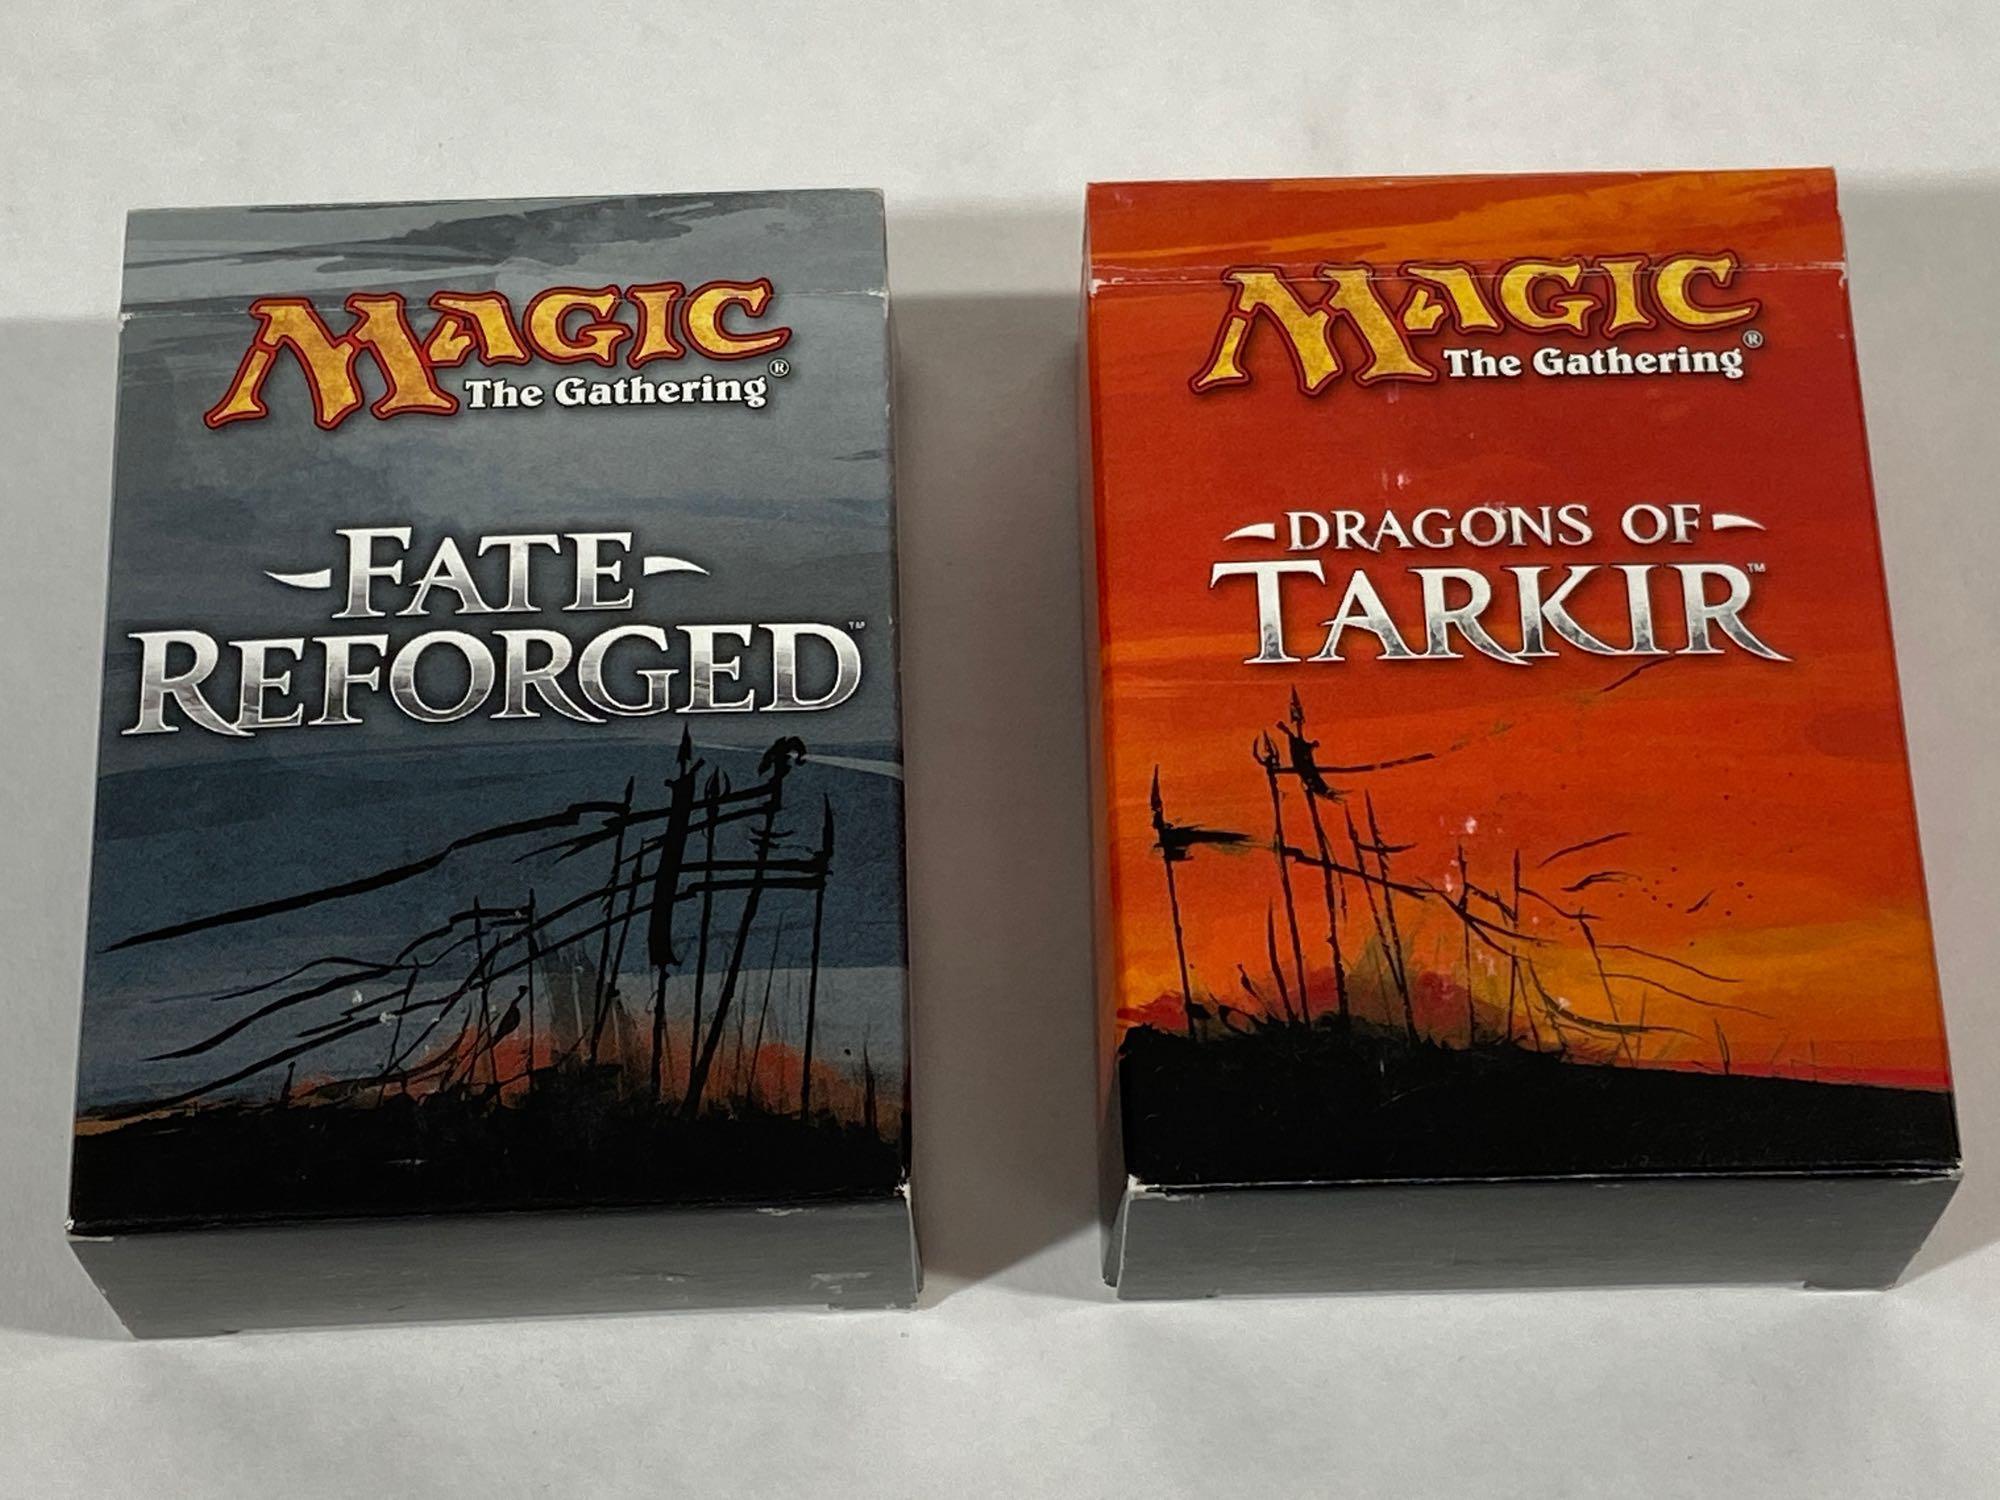 2 Decks of MTG Magic the Gathering Trading Cards